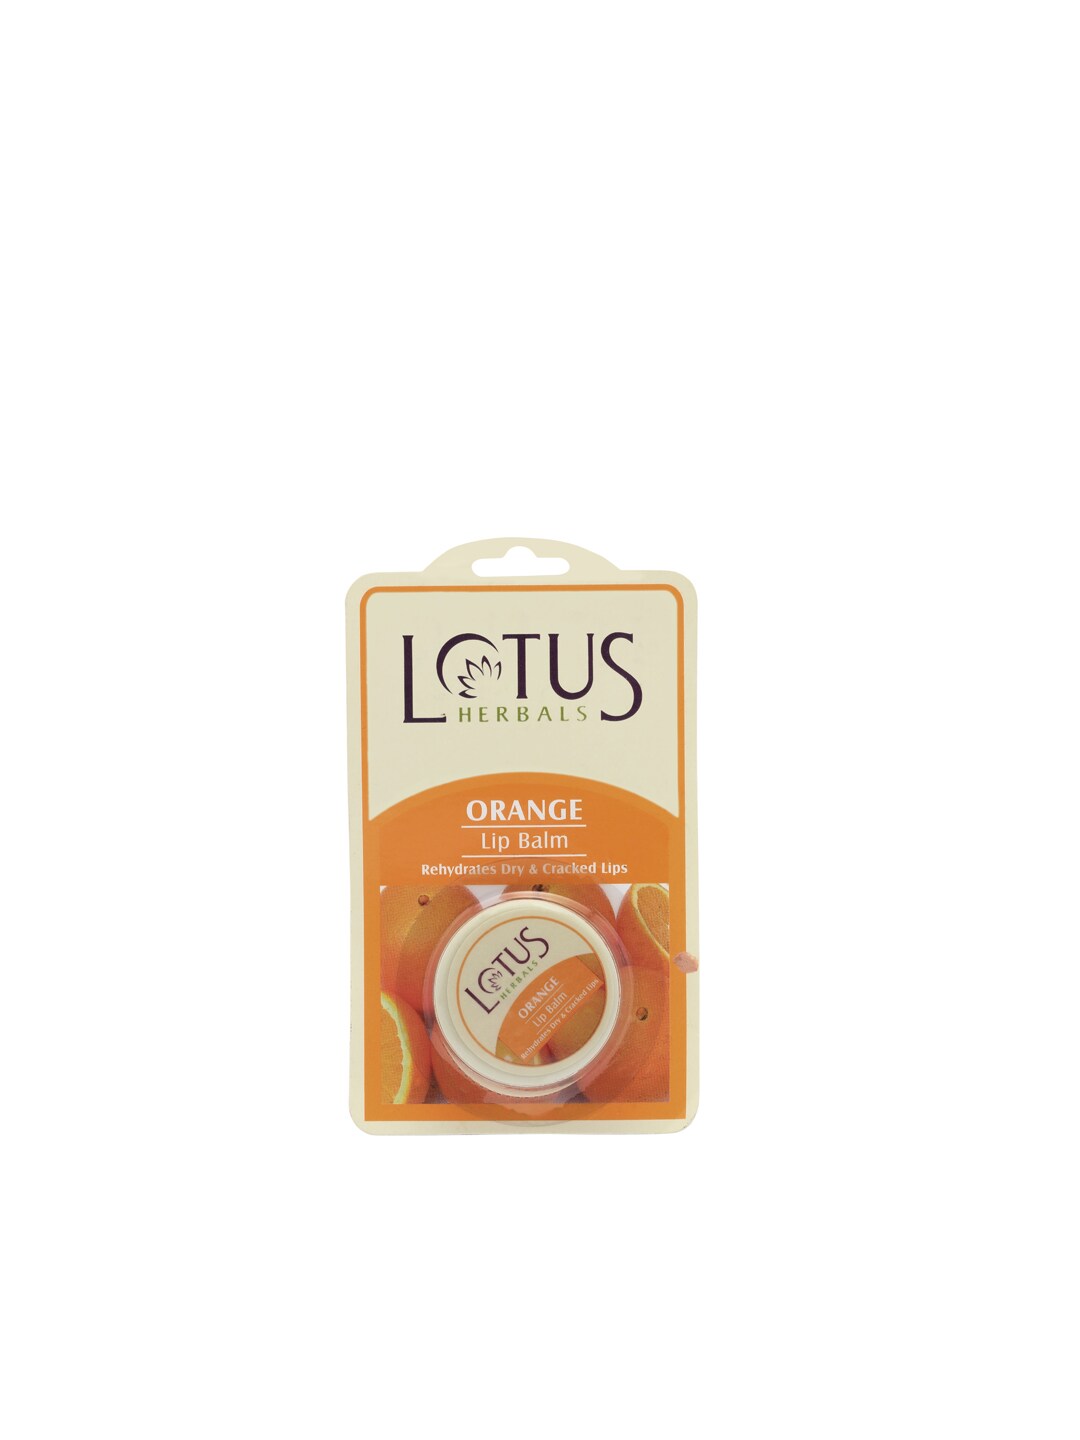 Lotus Herbals Orange Lip Balm